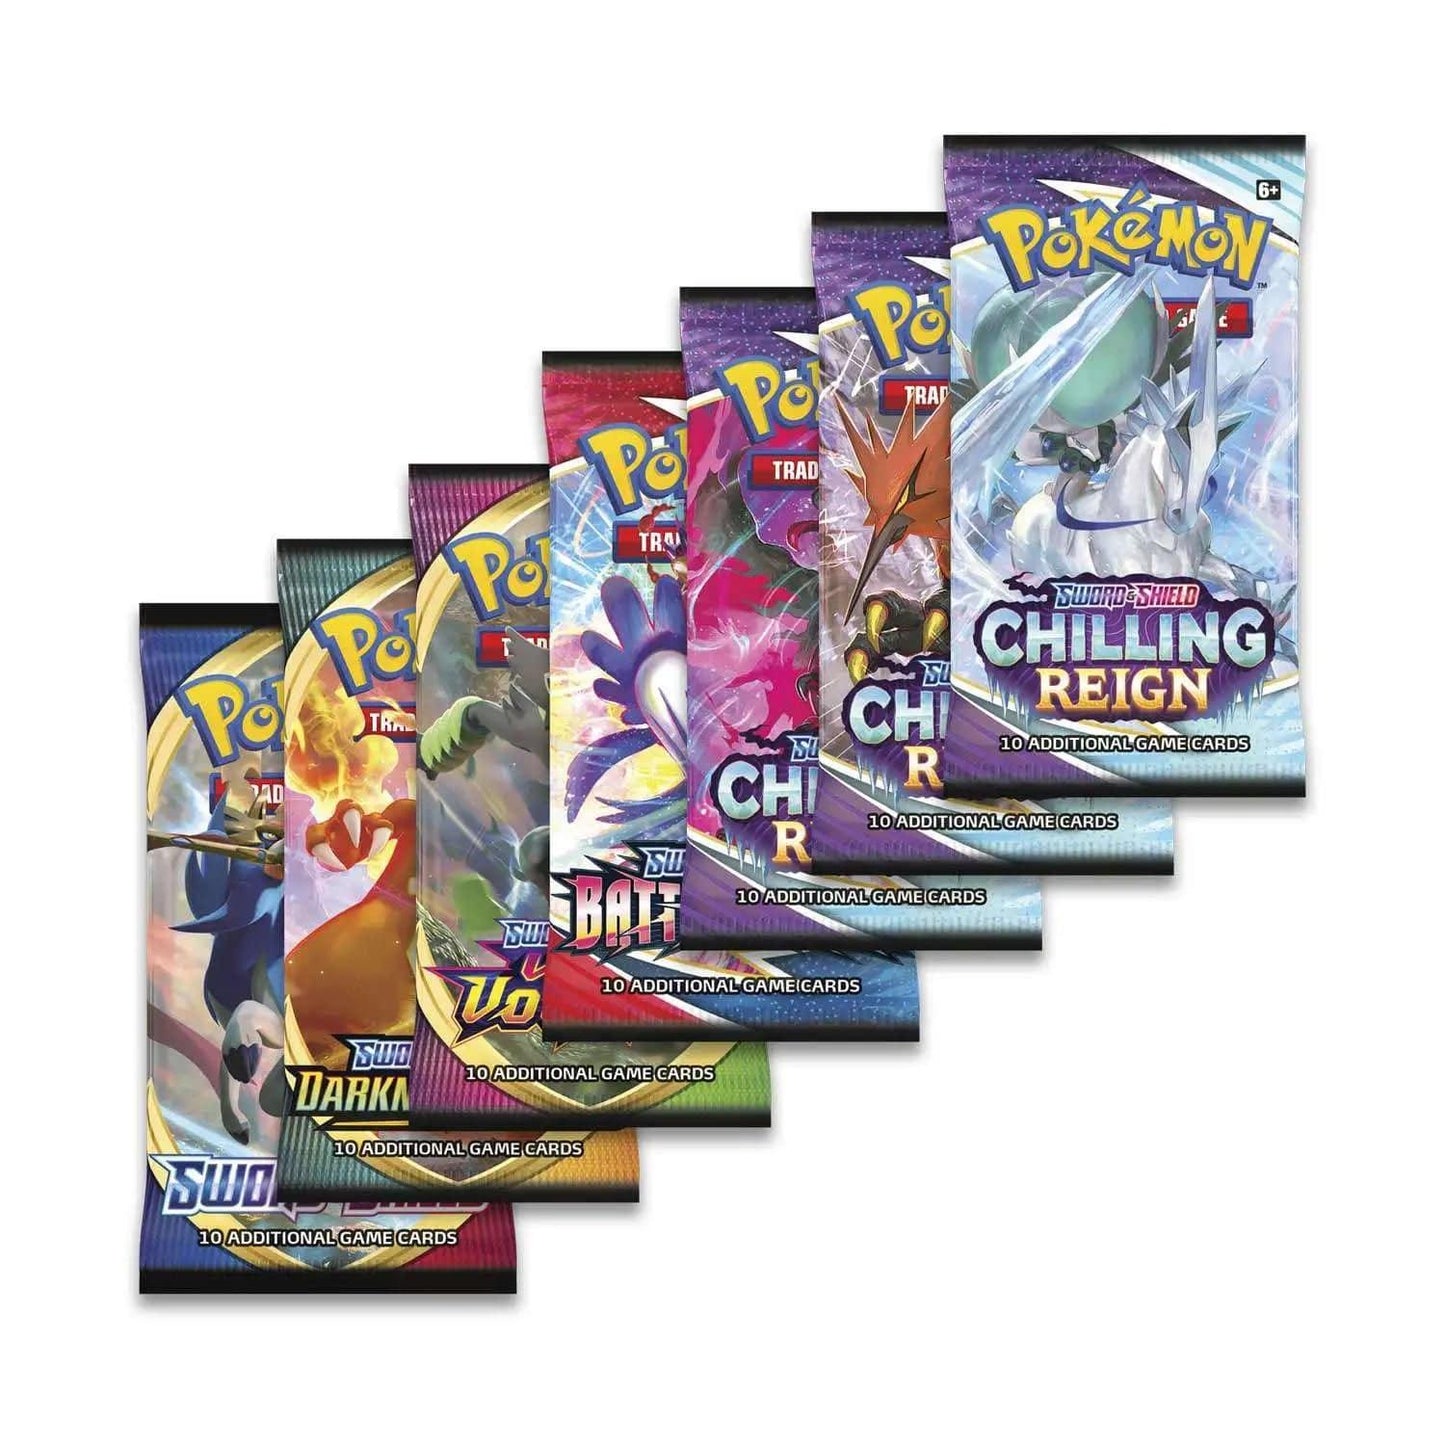 Pokémon Pokemon Trading Card Game Pokémon Professor Juniper Premium Tournament Collection (7722888003832)